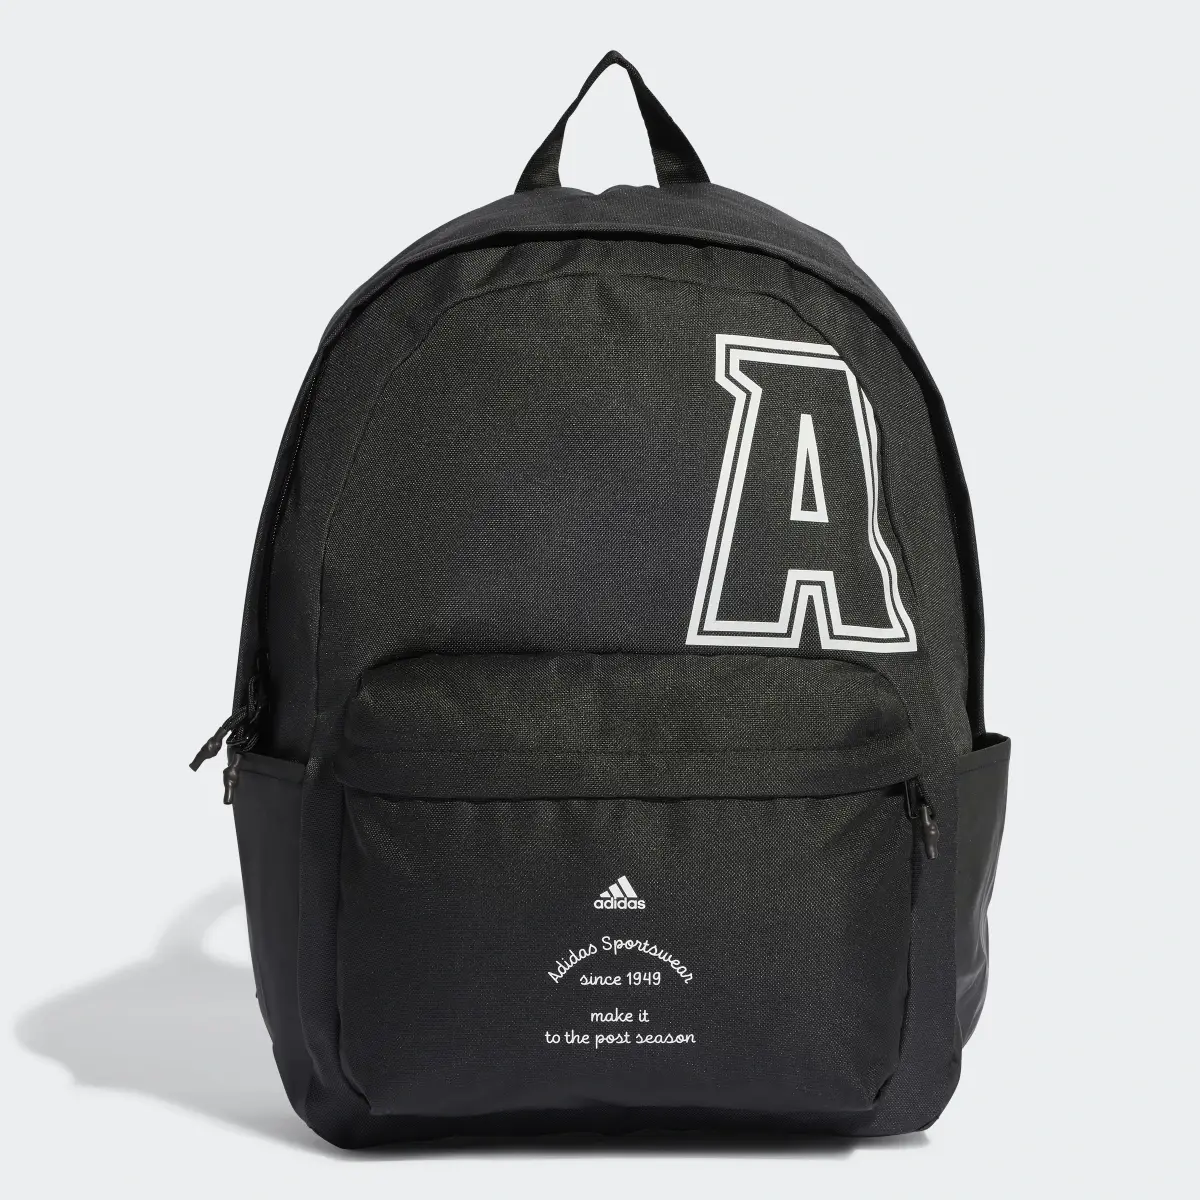 Adidas Classic Brand Love Initial Print Backpack. 2